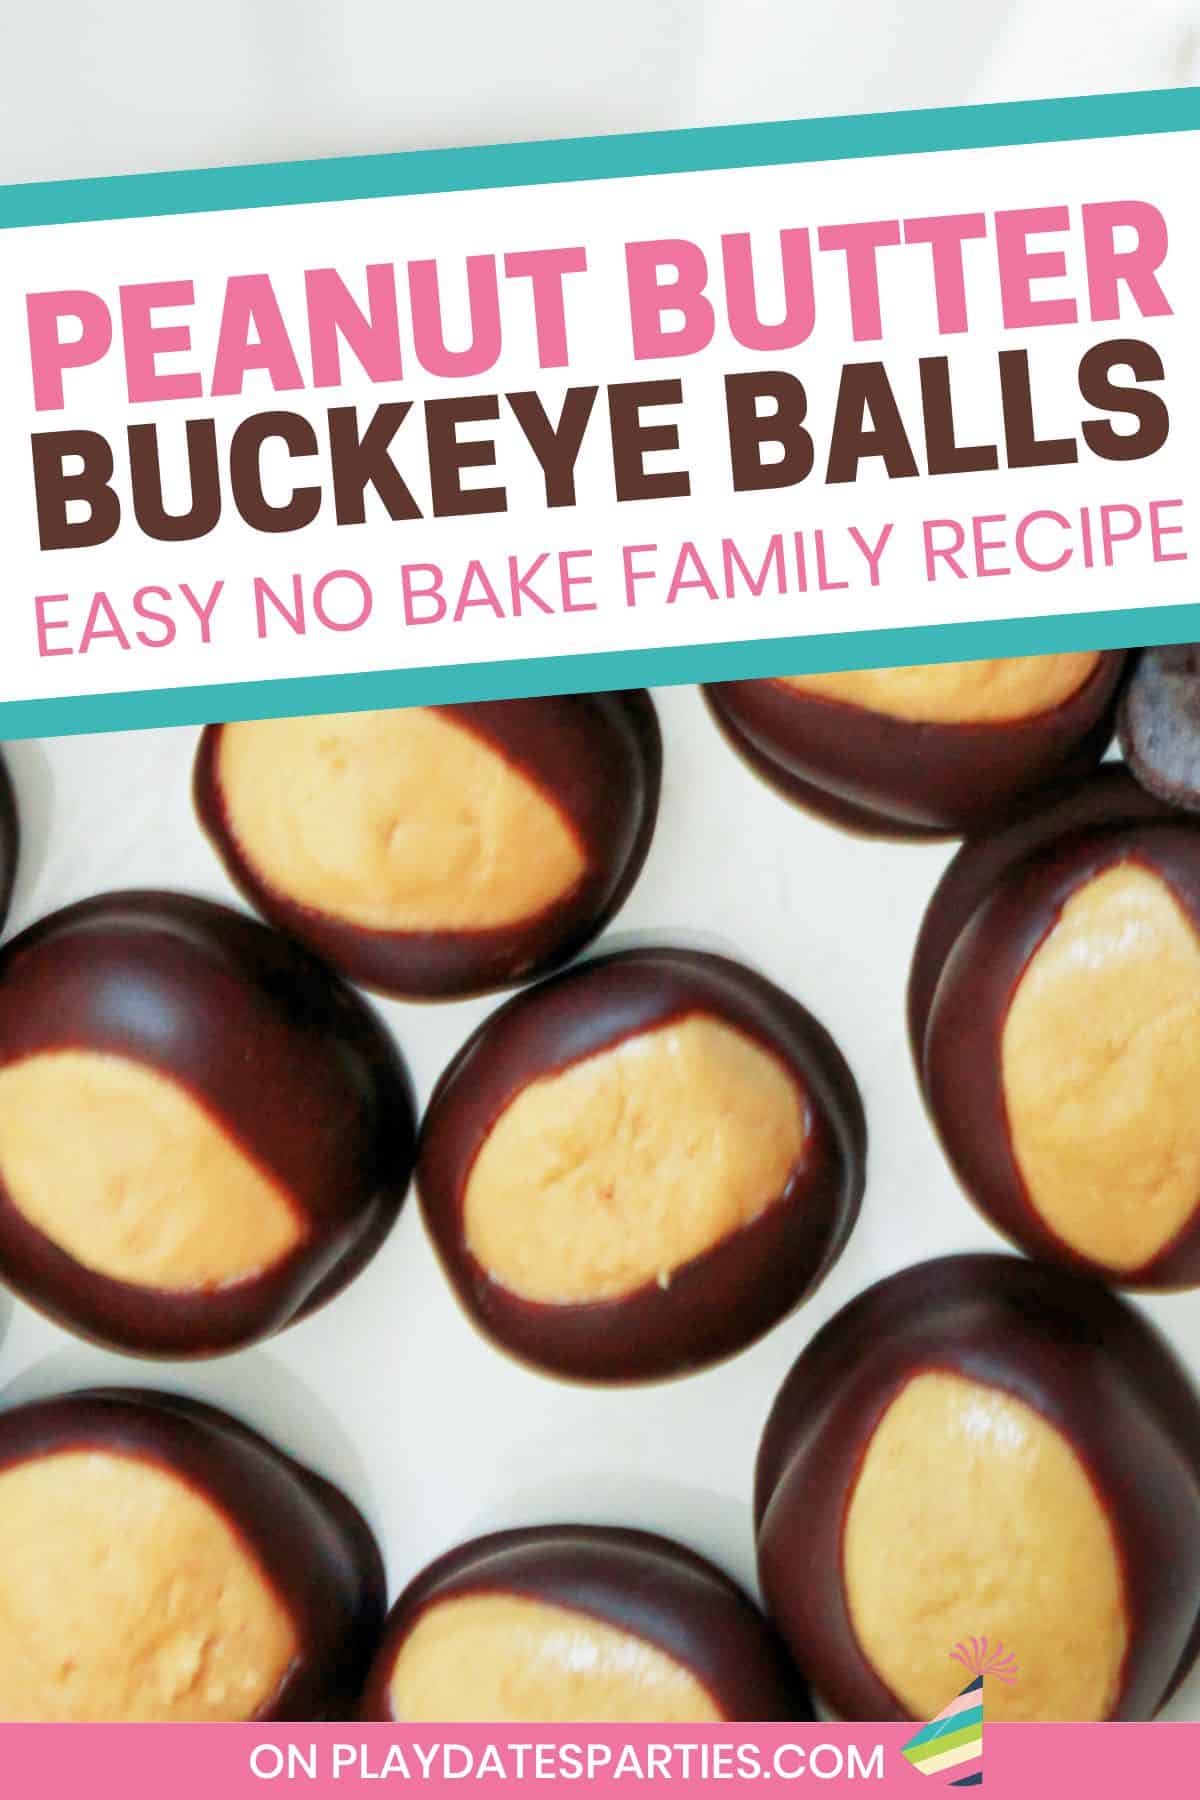 Peanut Butter Buckeye Balls No Bake Family Recipe Pin Image.